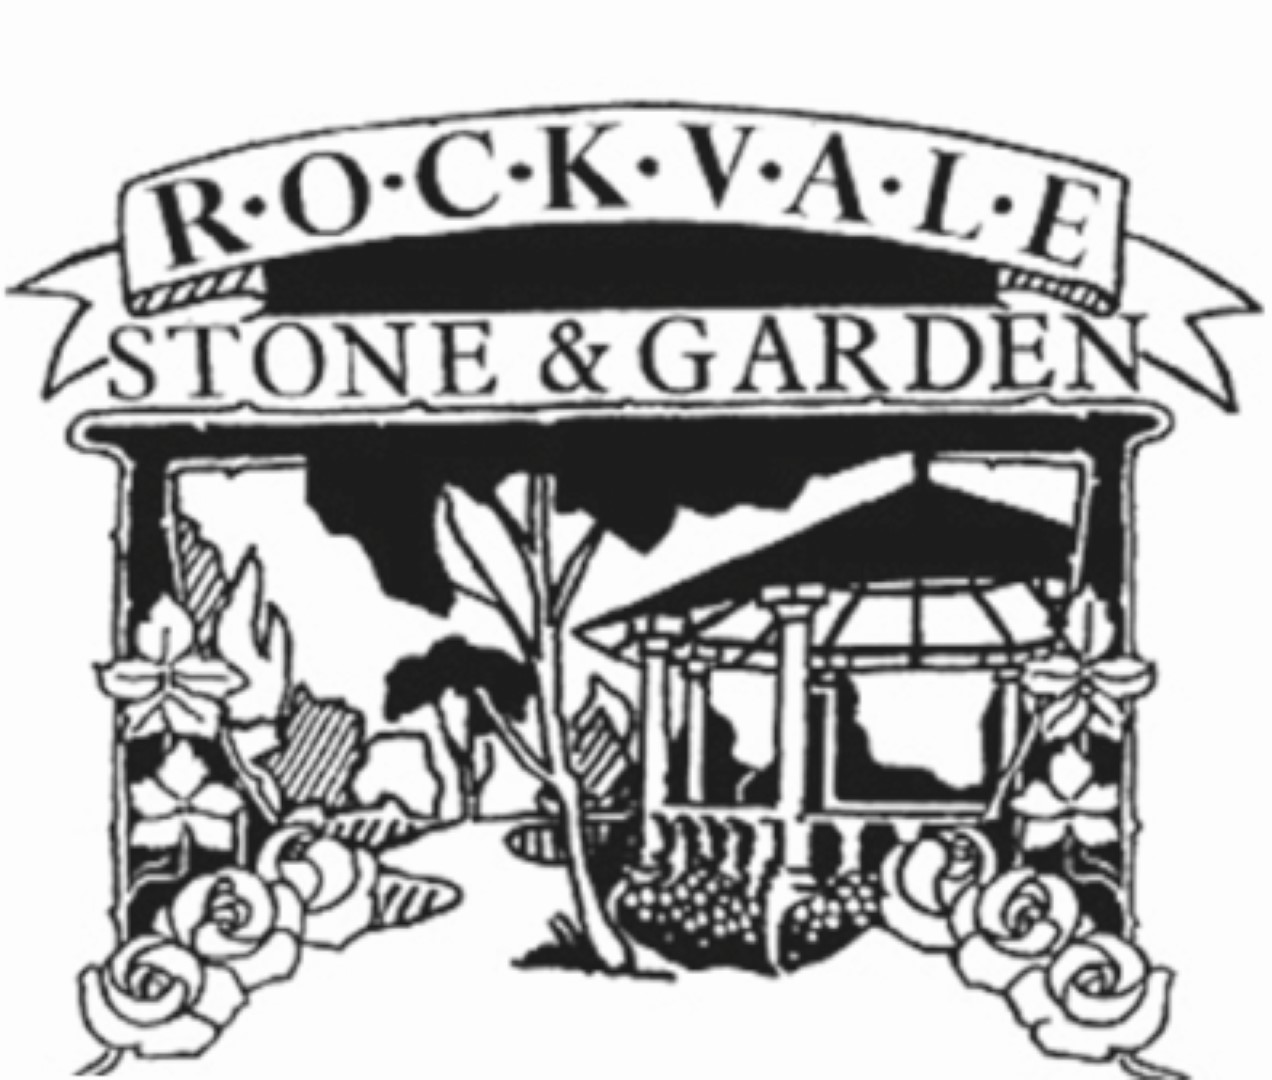 Rockvale Stone & Garden